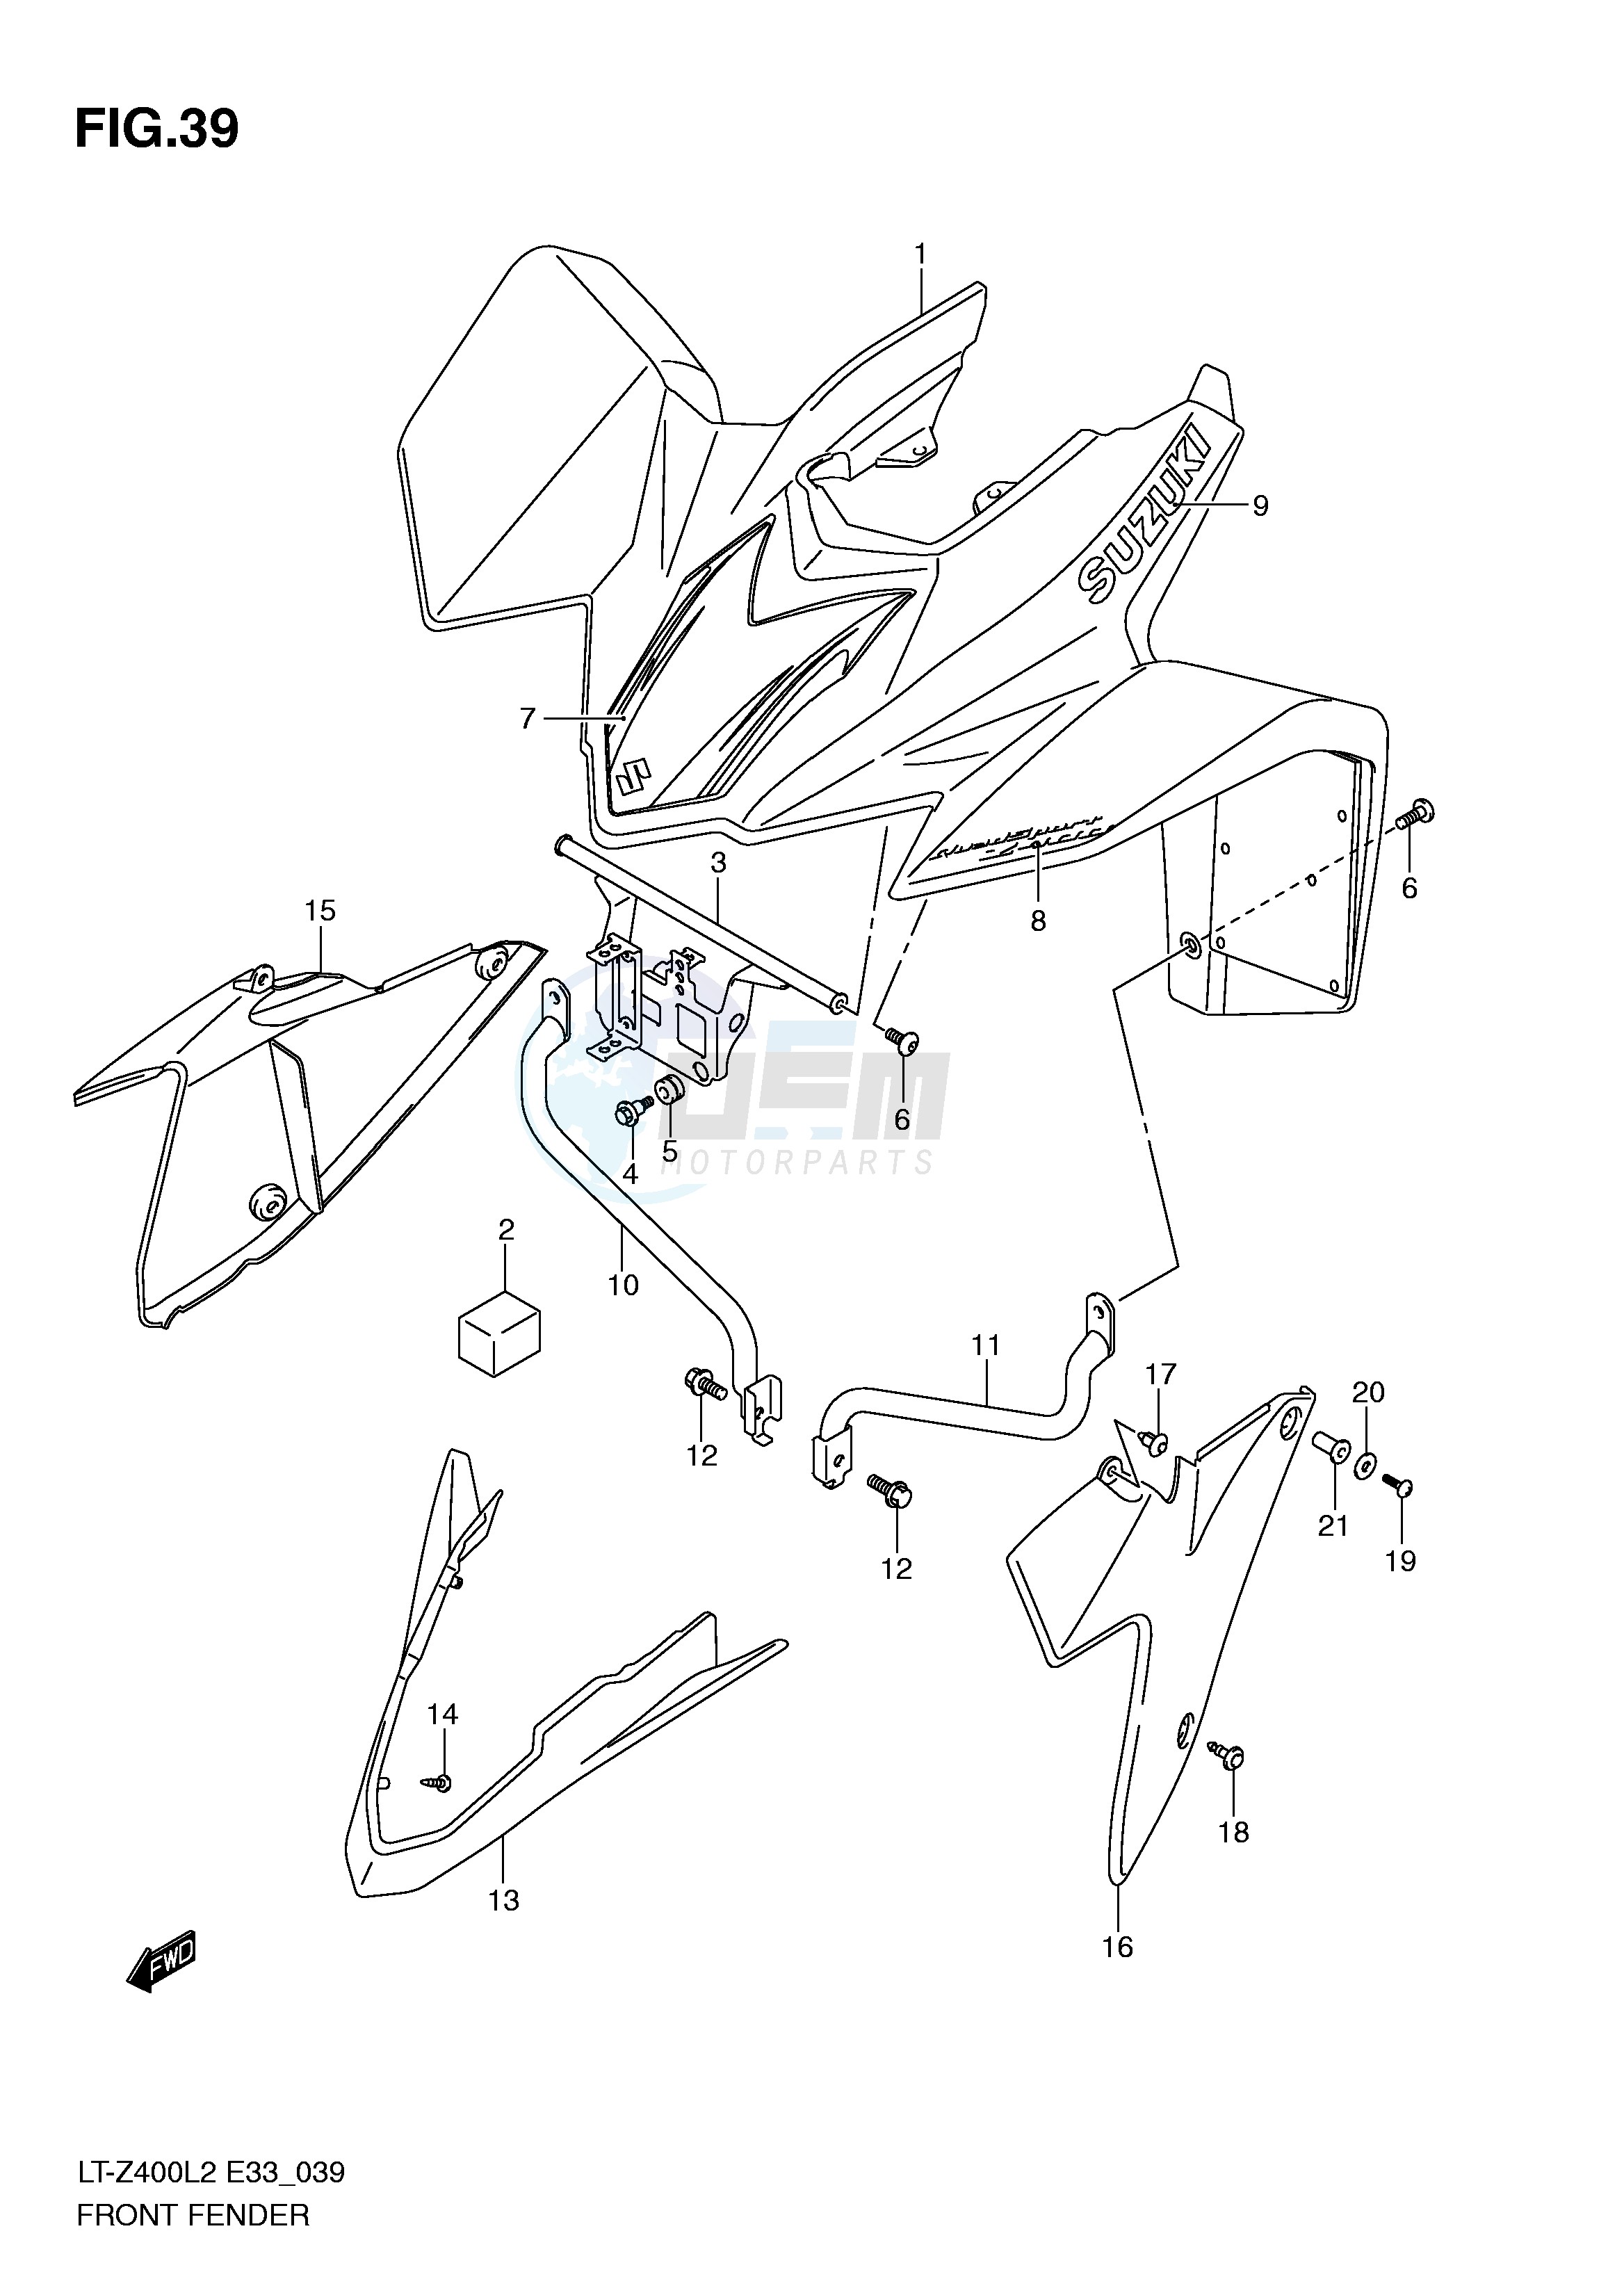 FRONT FENDER (LT-Z400L2 E33) blueprint